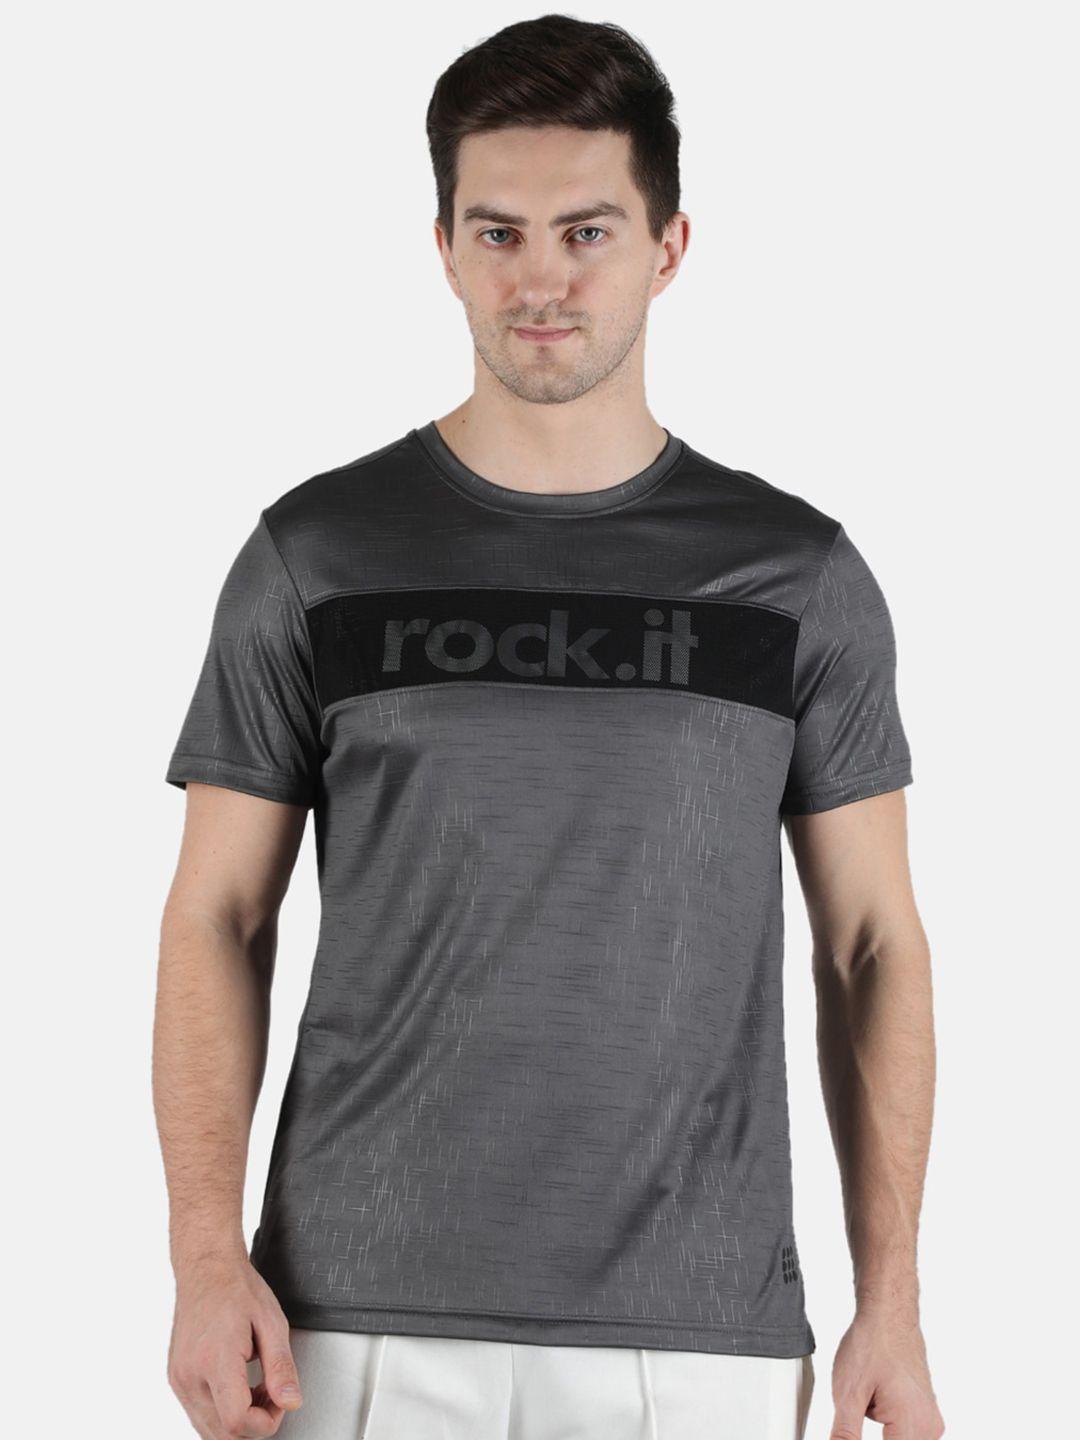 rock it men grey typography printed training or gym t-shirt